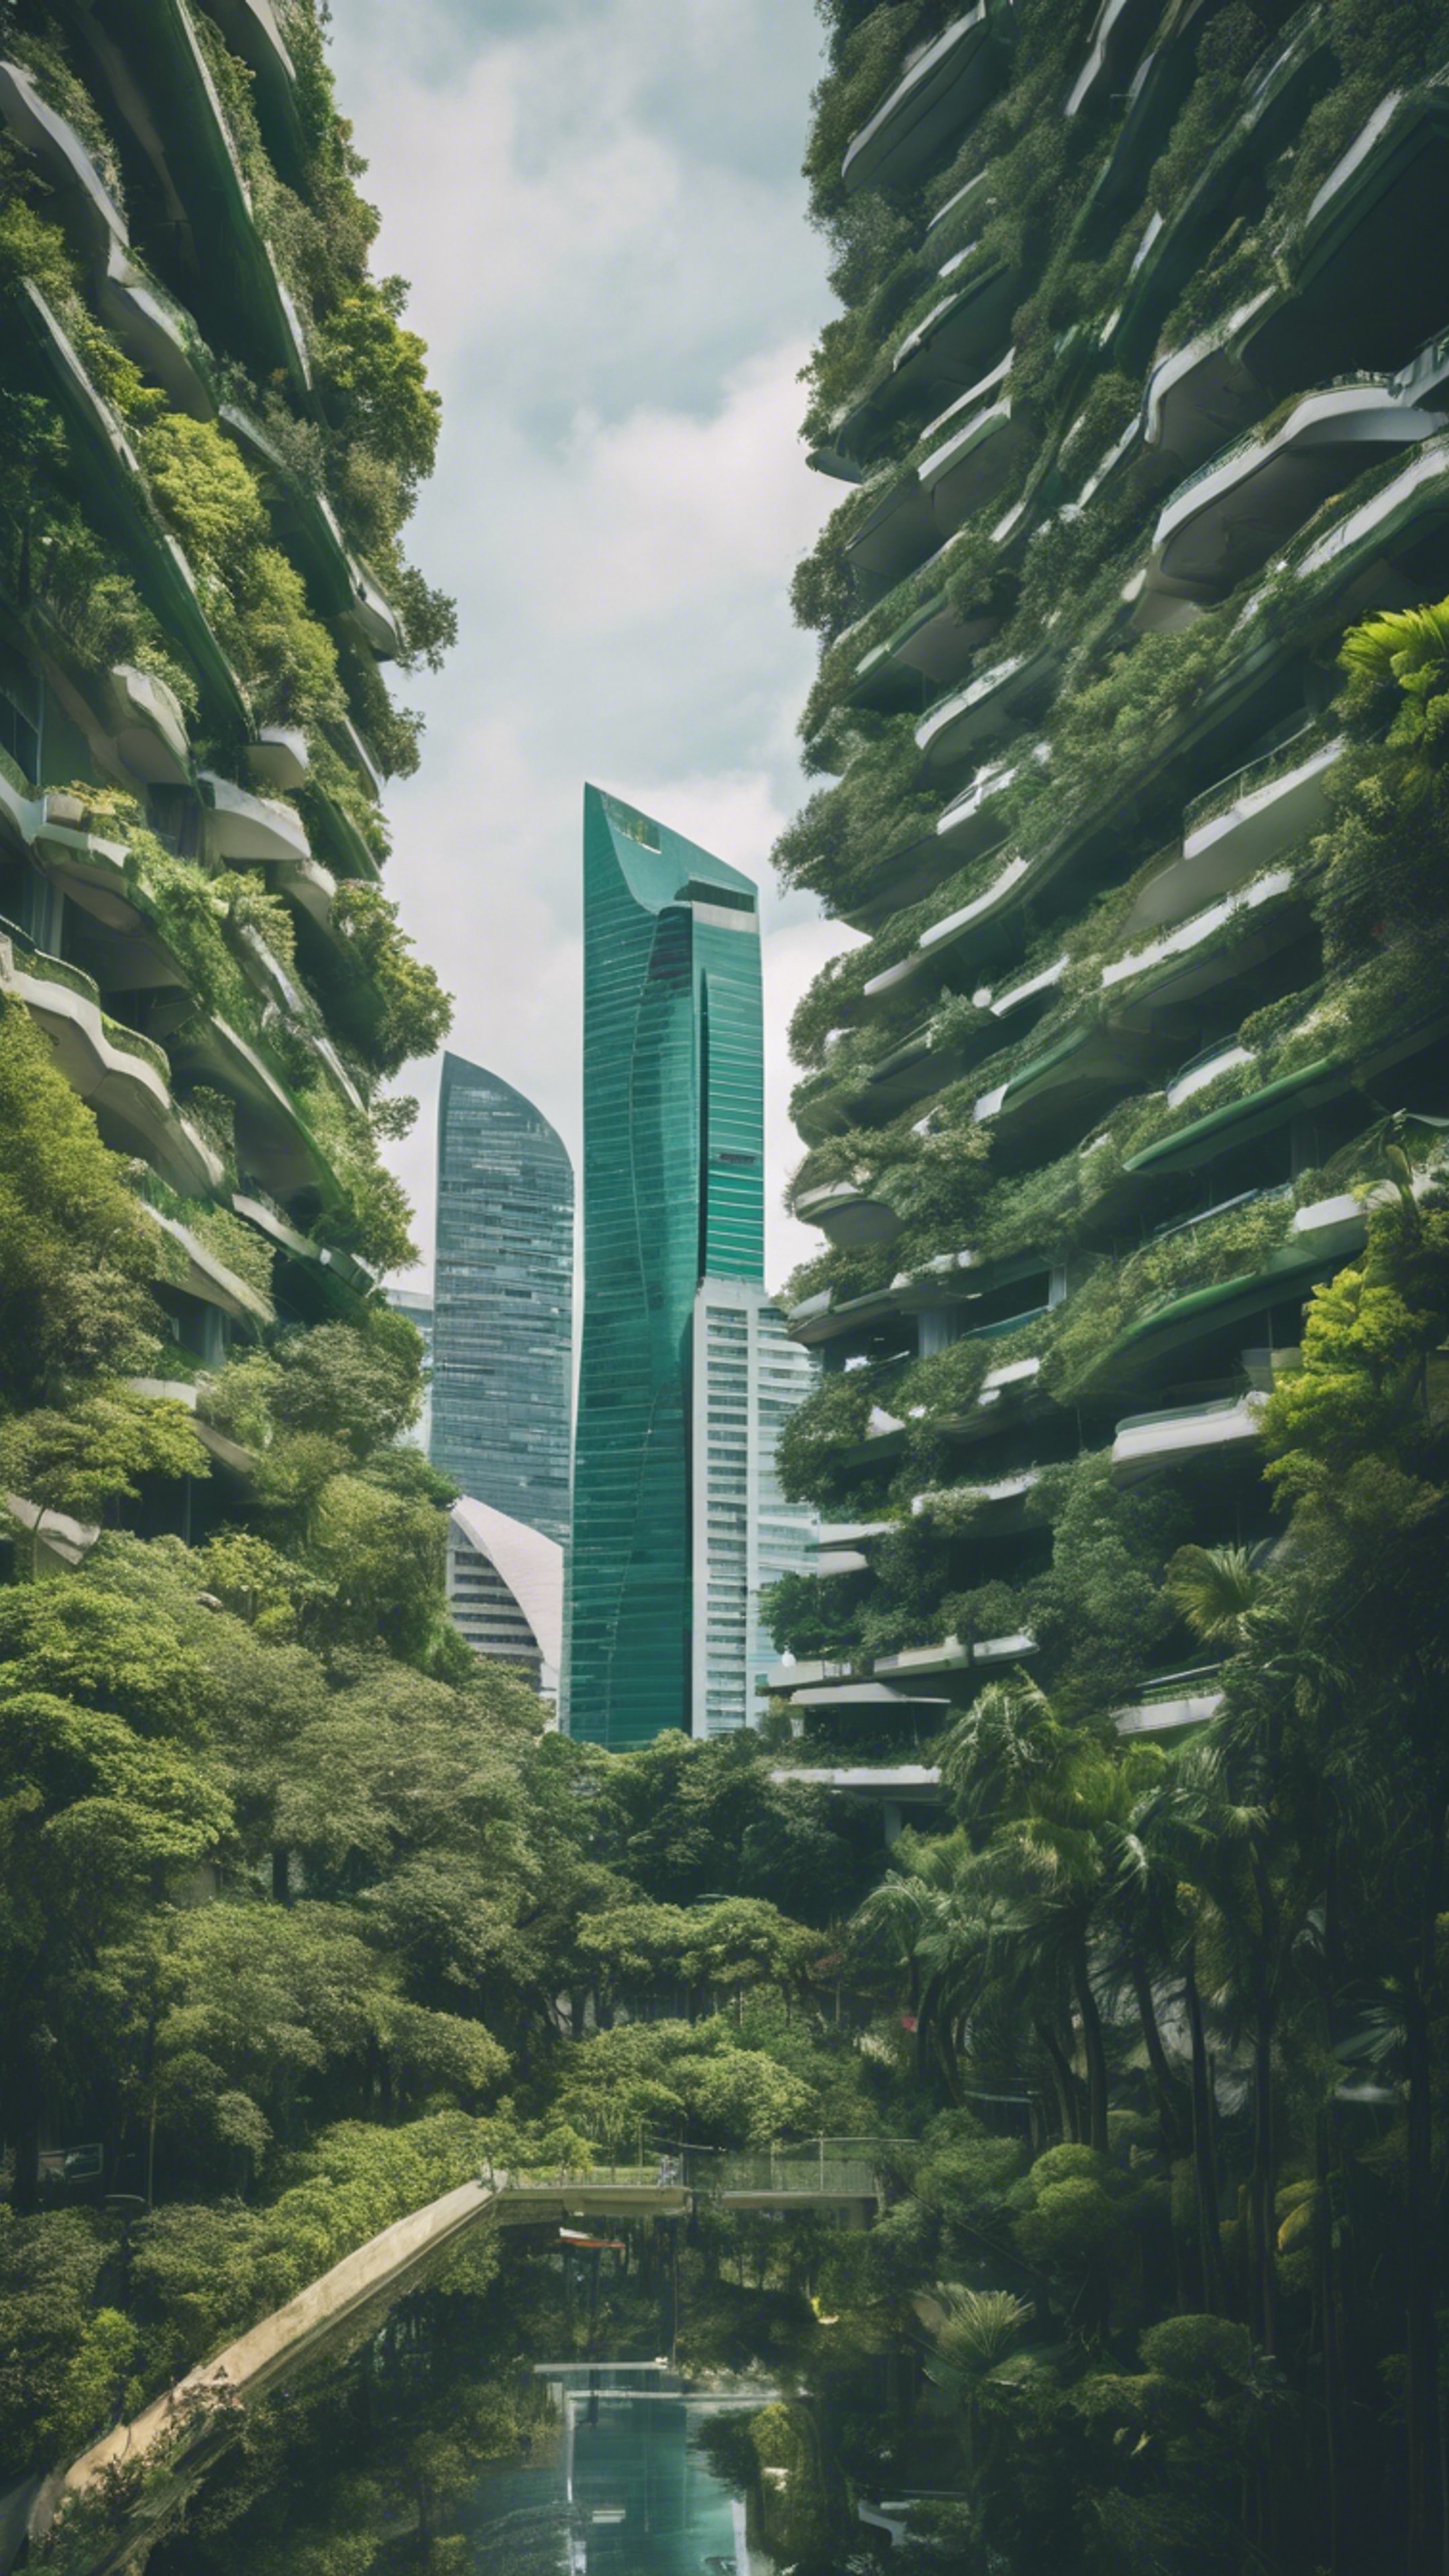 The green skyline of Singapore, blending modern skyscrapers and lush gardens.壁紙[6e5bf6f170a6457da50c]